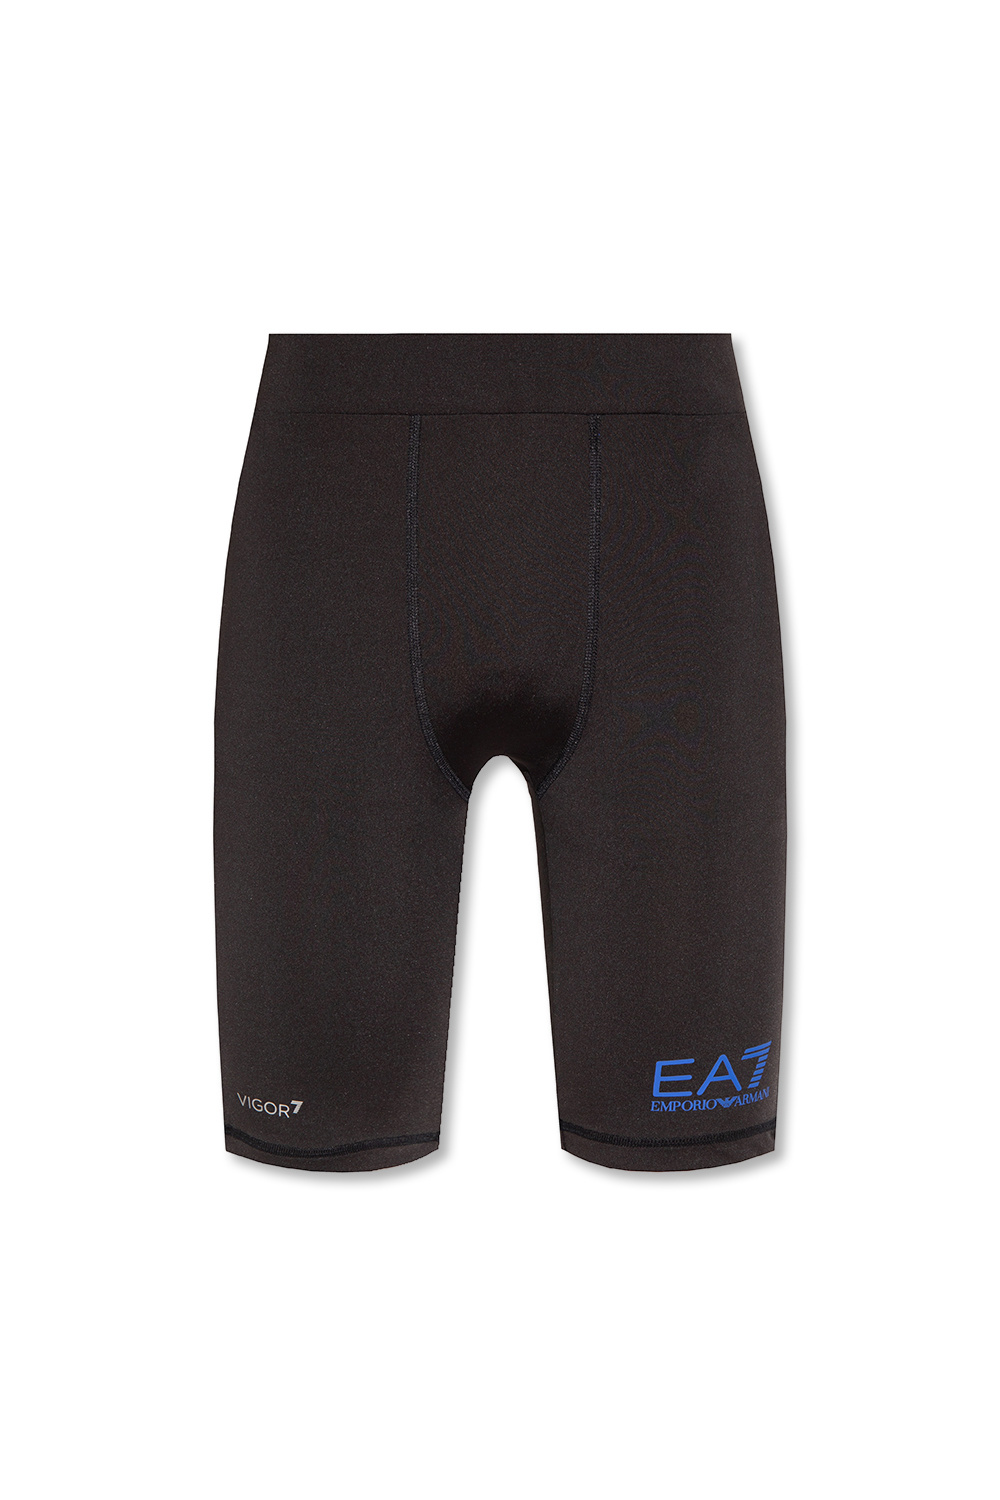 EA7 Emporio armani amp Short leggings